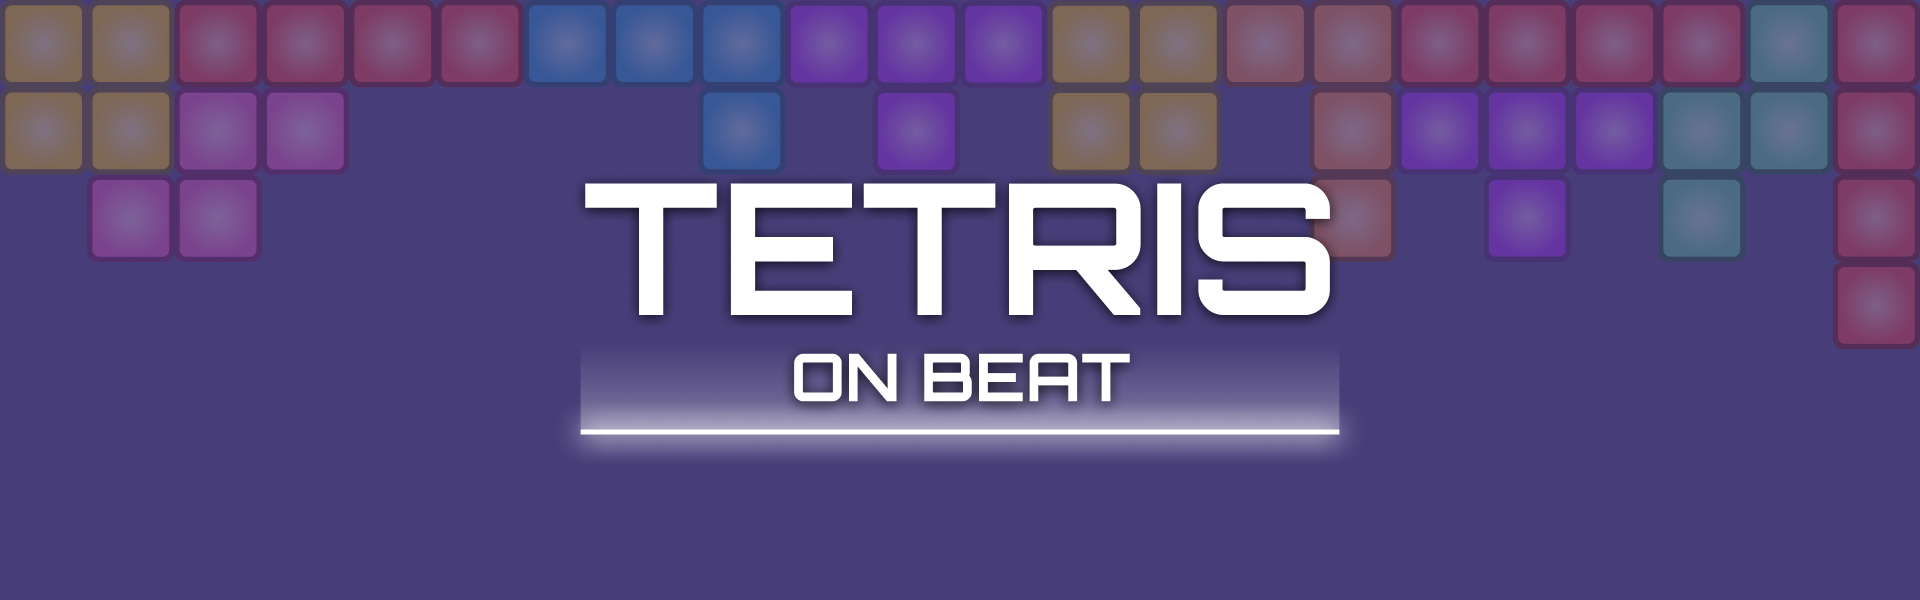 Tetris on Beat by blazingsoft